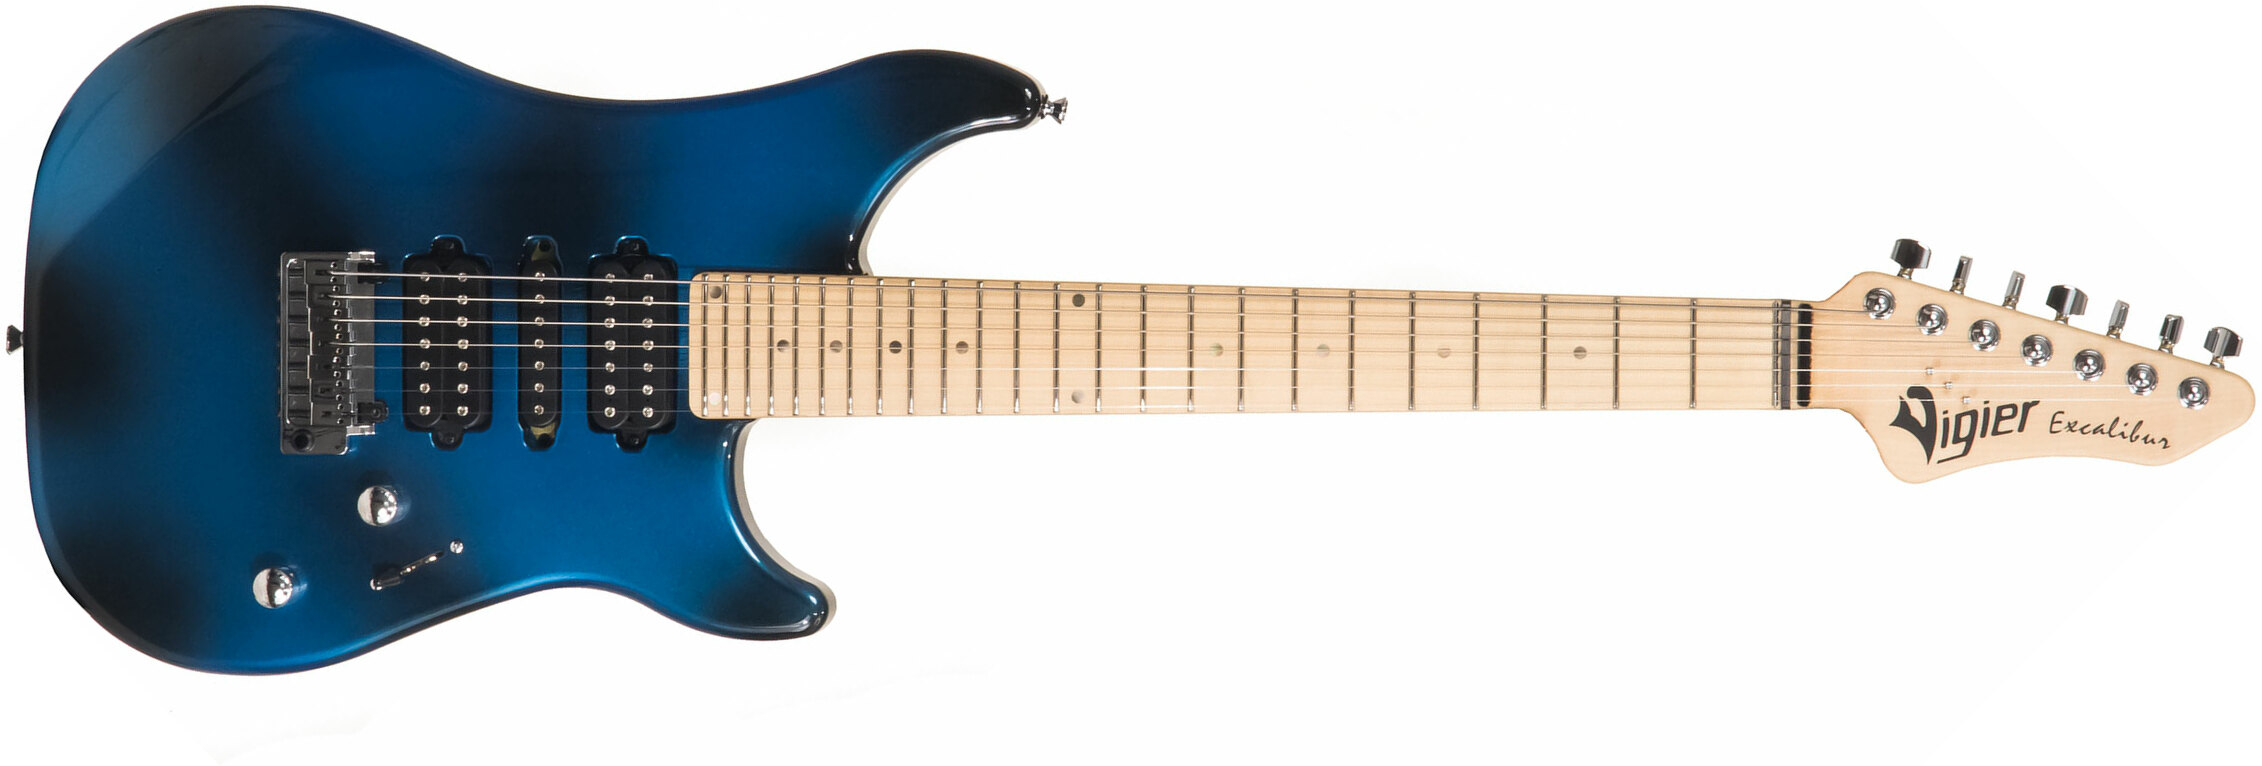 Vigier Excalibur Supra 7c Hsh Trem Mn - Urban Blue - Guitarra eléctrica de 7 cuerdas - Main picture